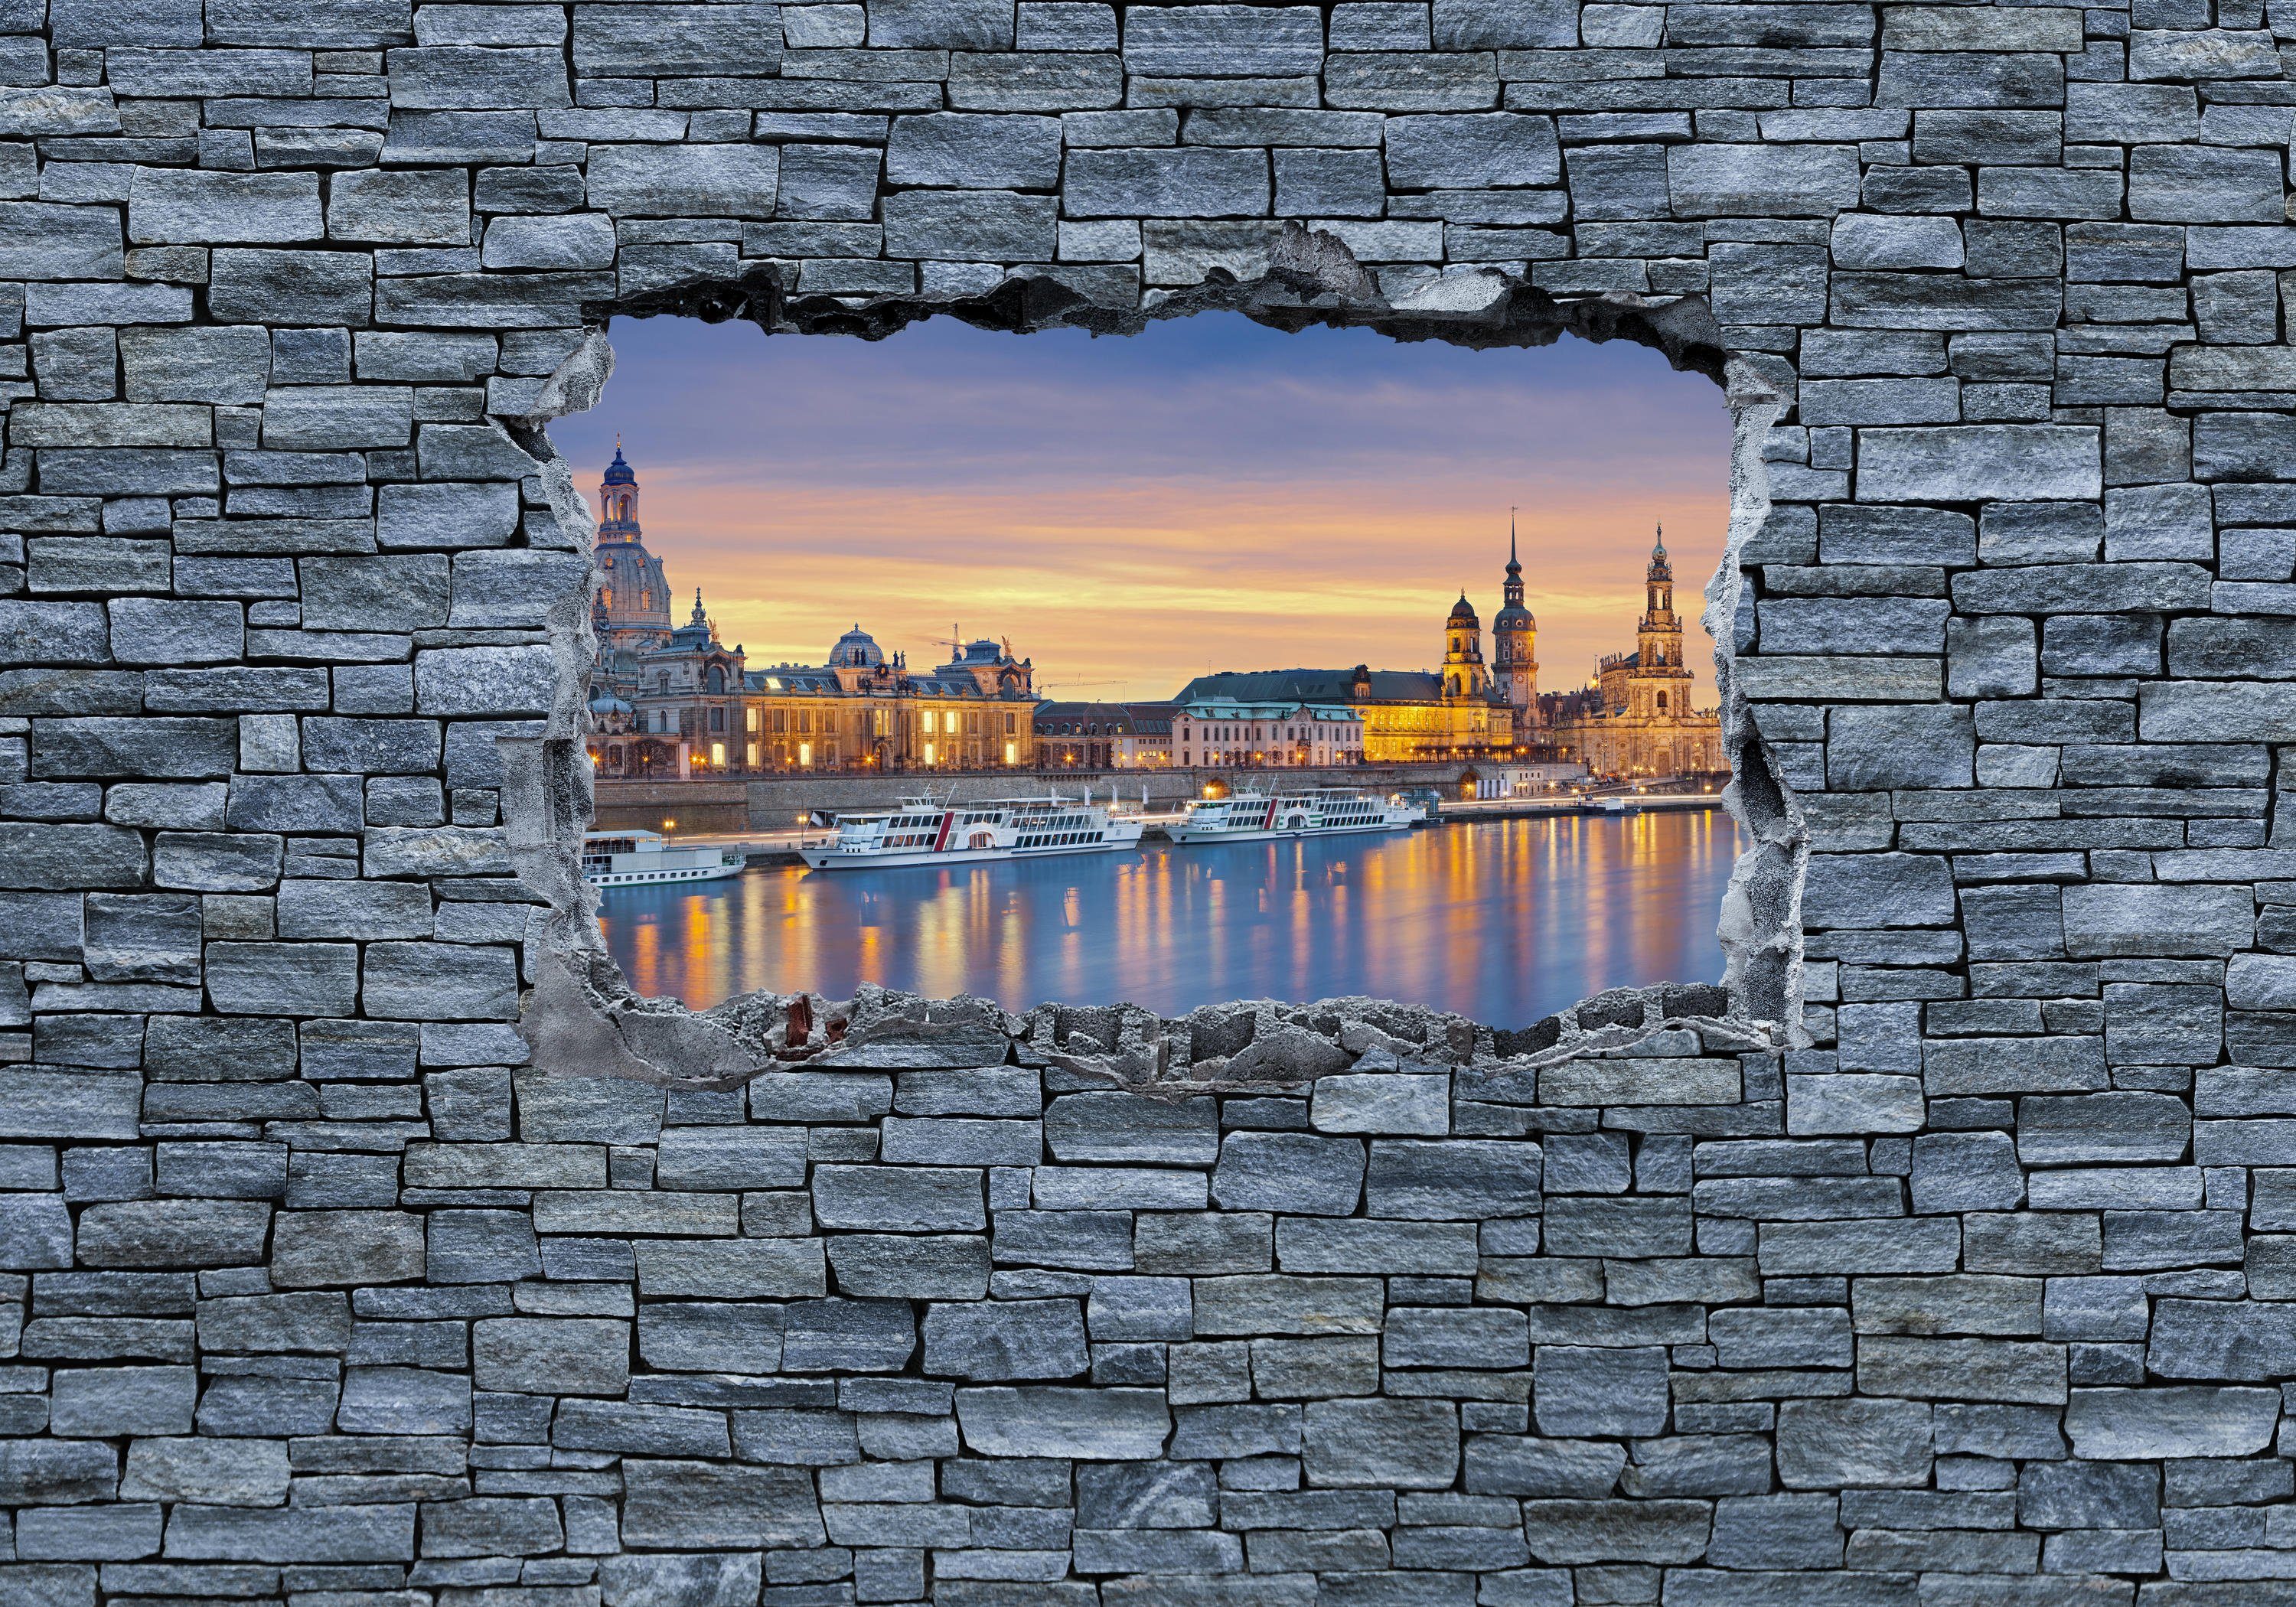 wandmotiv24 Fototapete 3D Dresden - grobe Steinmauer, glatt, Wandtapete, Motivtapete, matt, Vliestapete